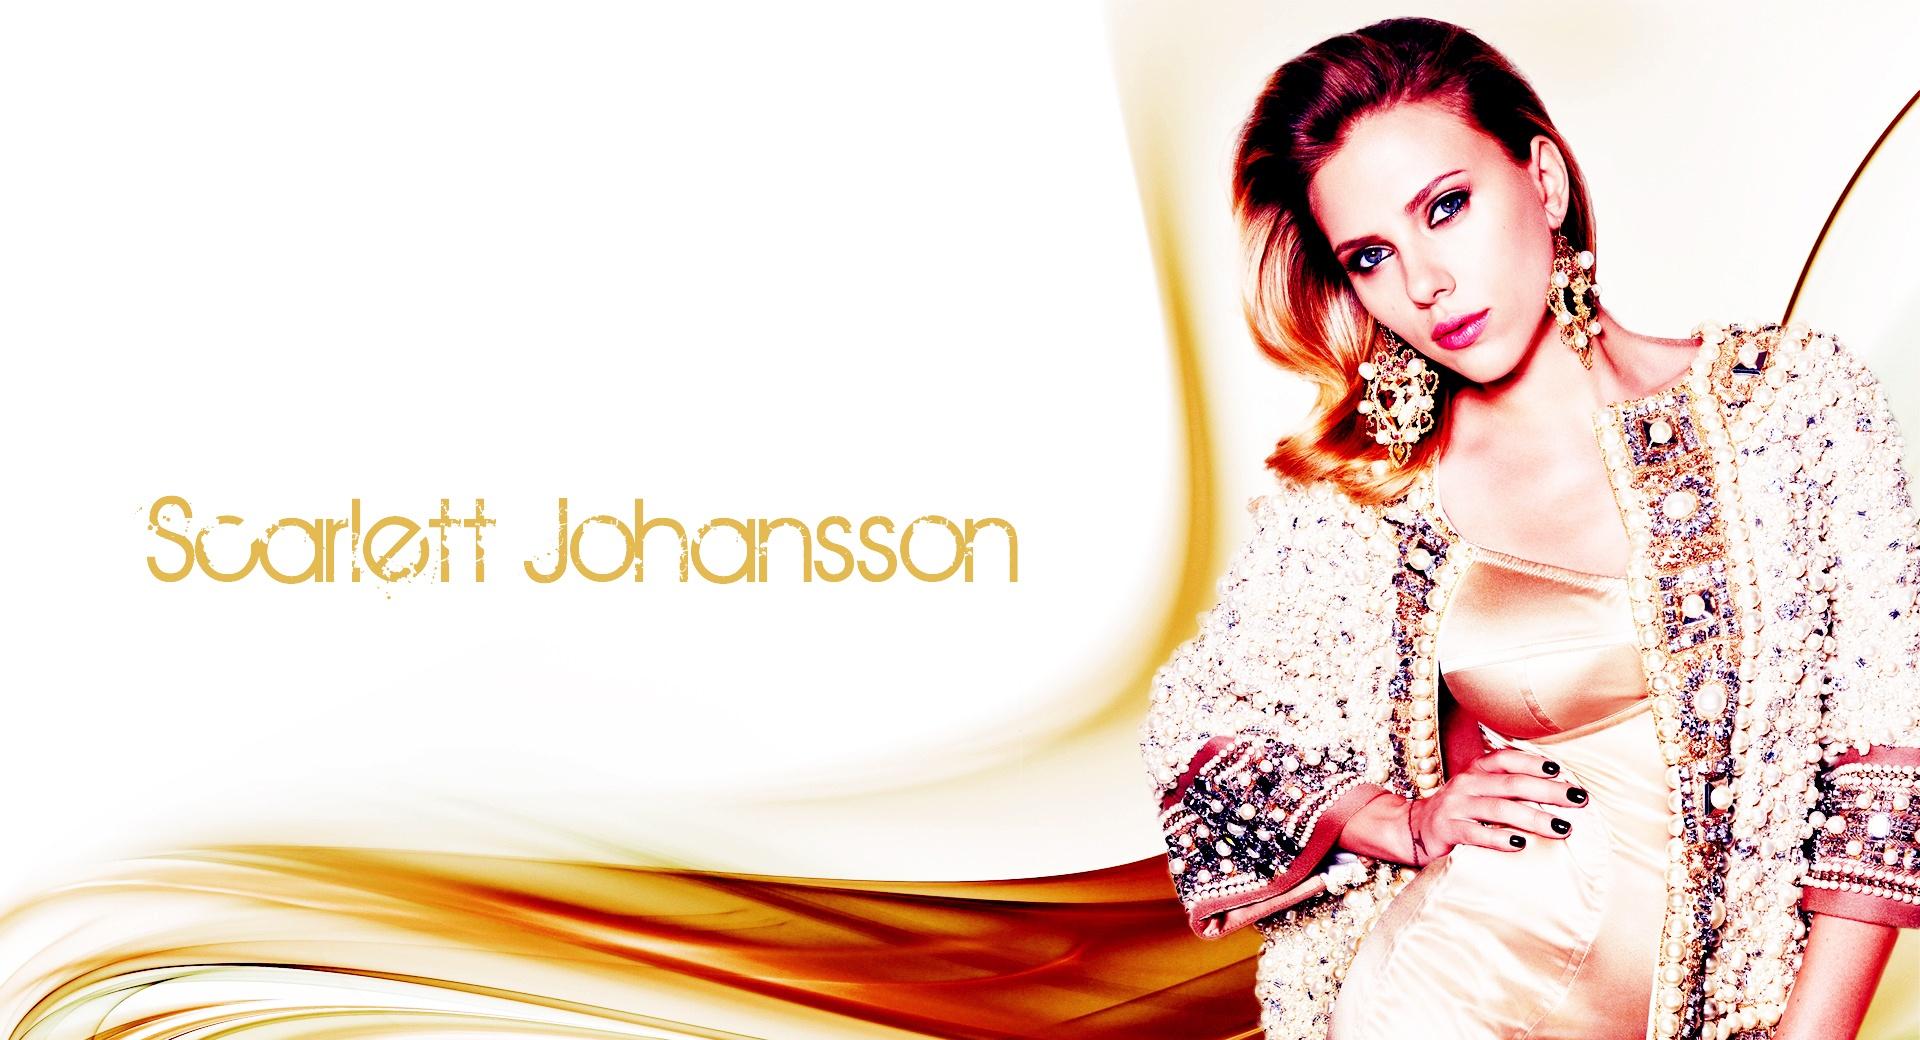 Scarlett Johansson Glamorous at 2048 x 2048 iPad size wallpapers HD quality